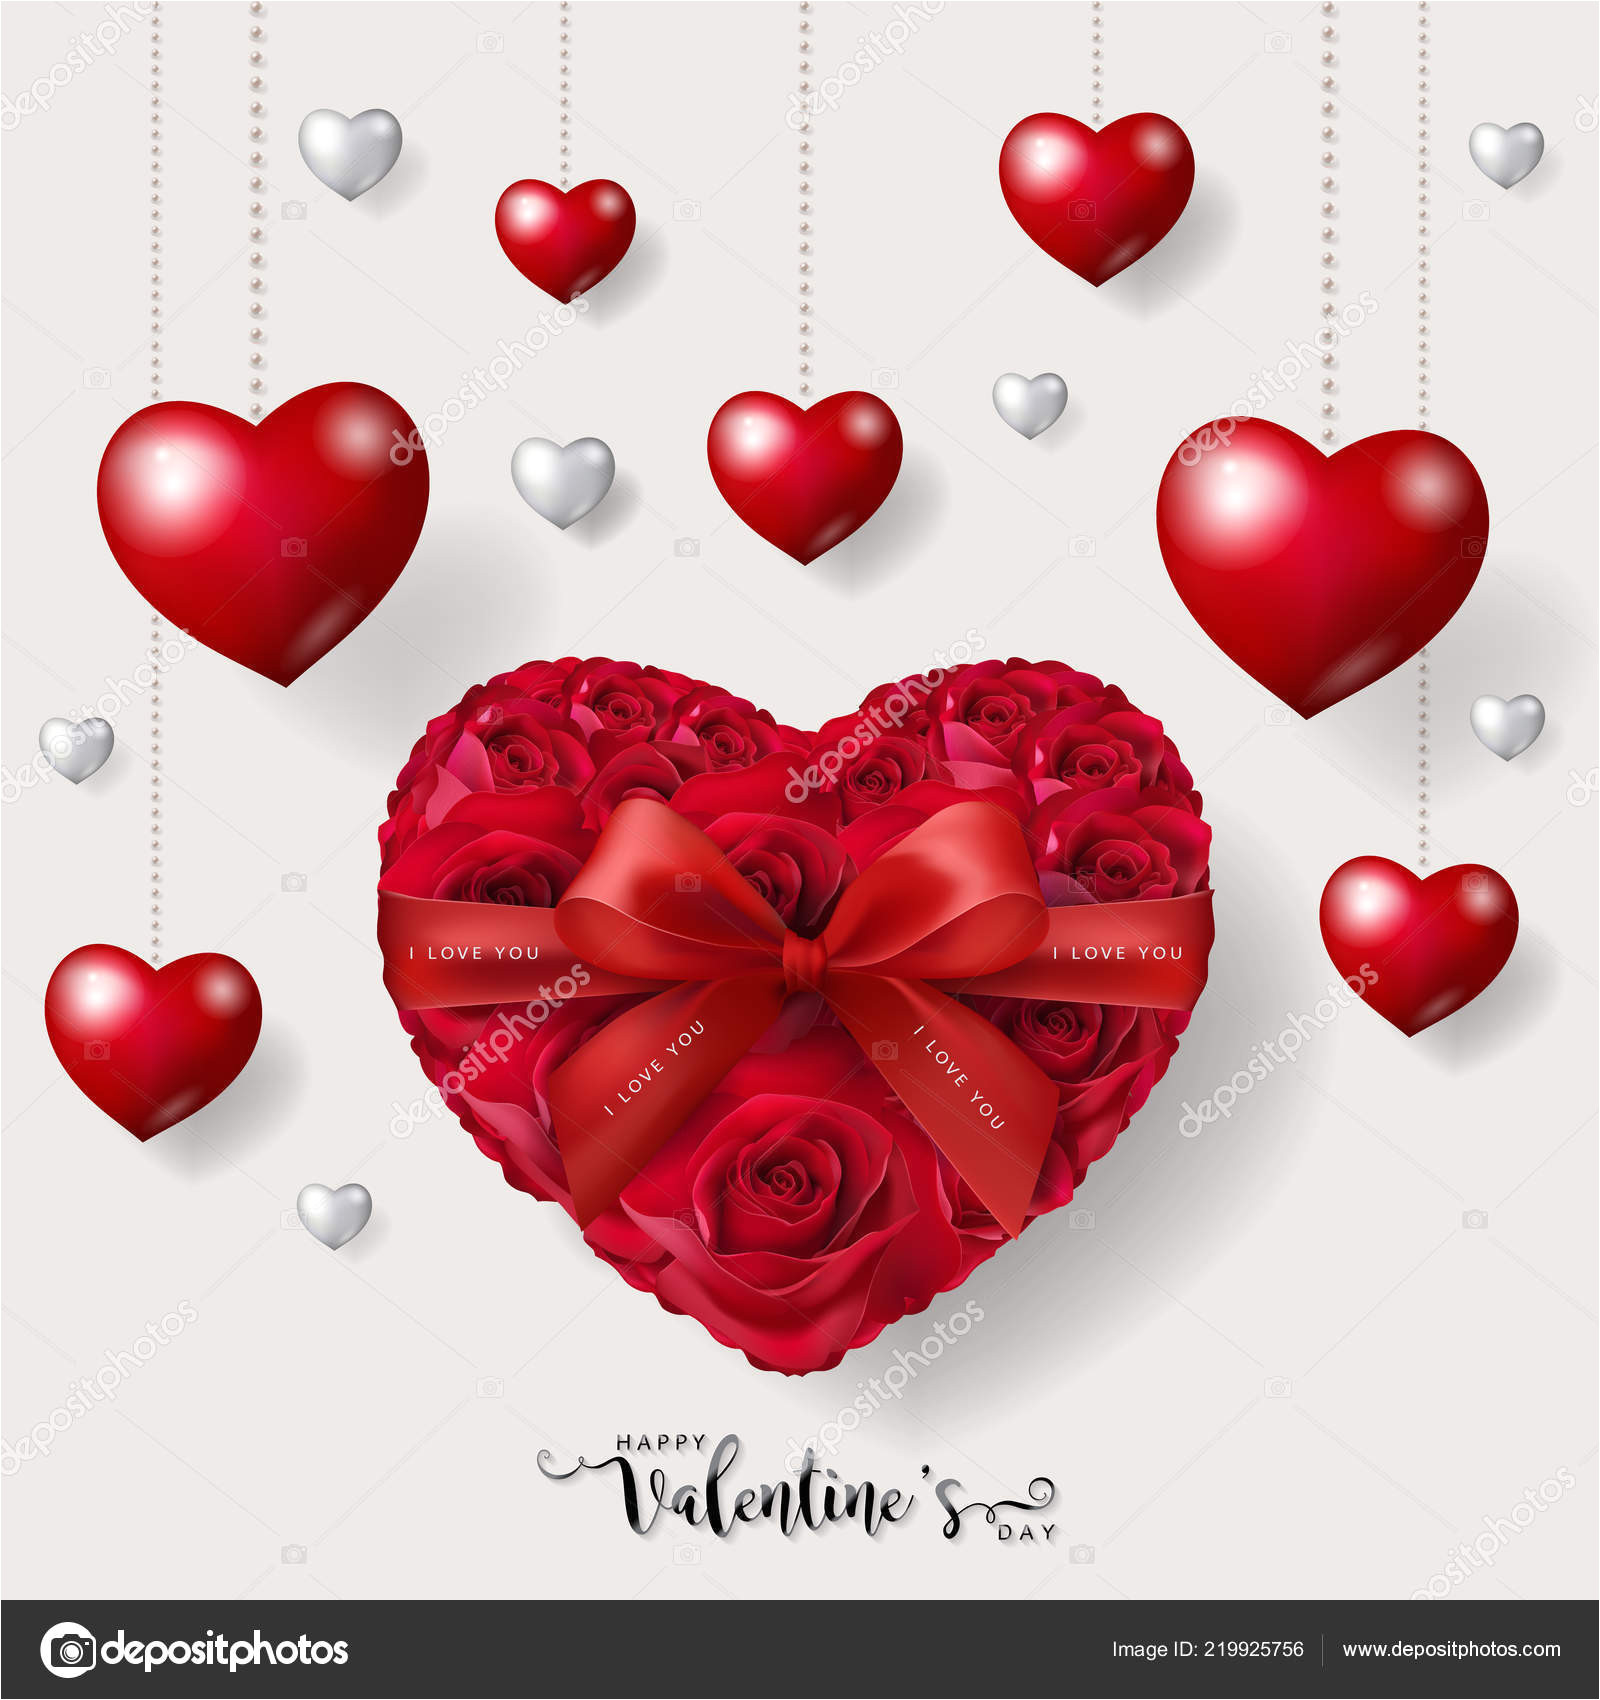 depositphotos 219925756 stock illustration valentine day greeting card templates jpg